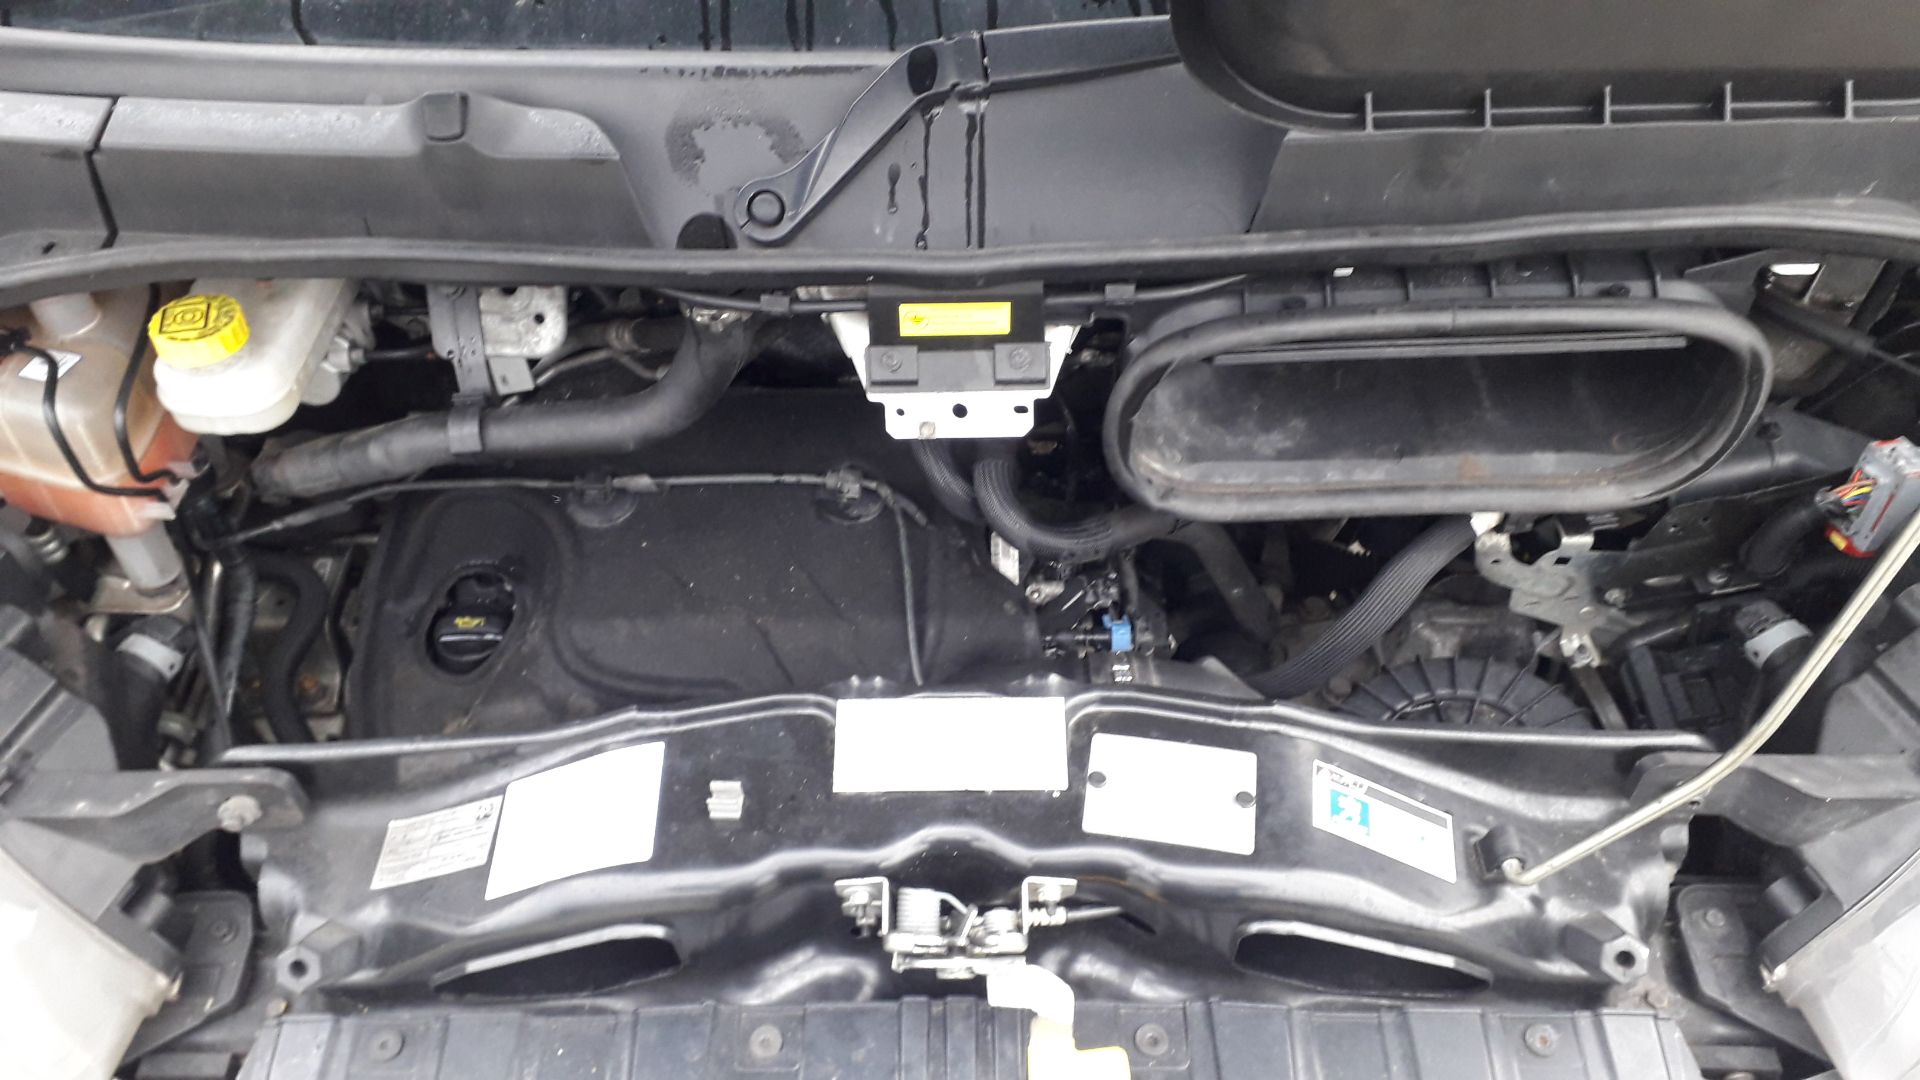 Peugeot Boxer 335 L3 Low Floor Luton Van Registration RX18 FZE, Odometer 72,819 Miles, 2 x Keys, V5 - Image 18 of 21